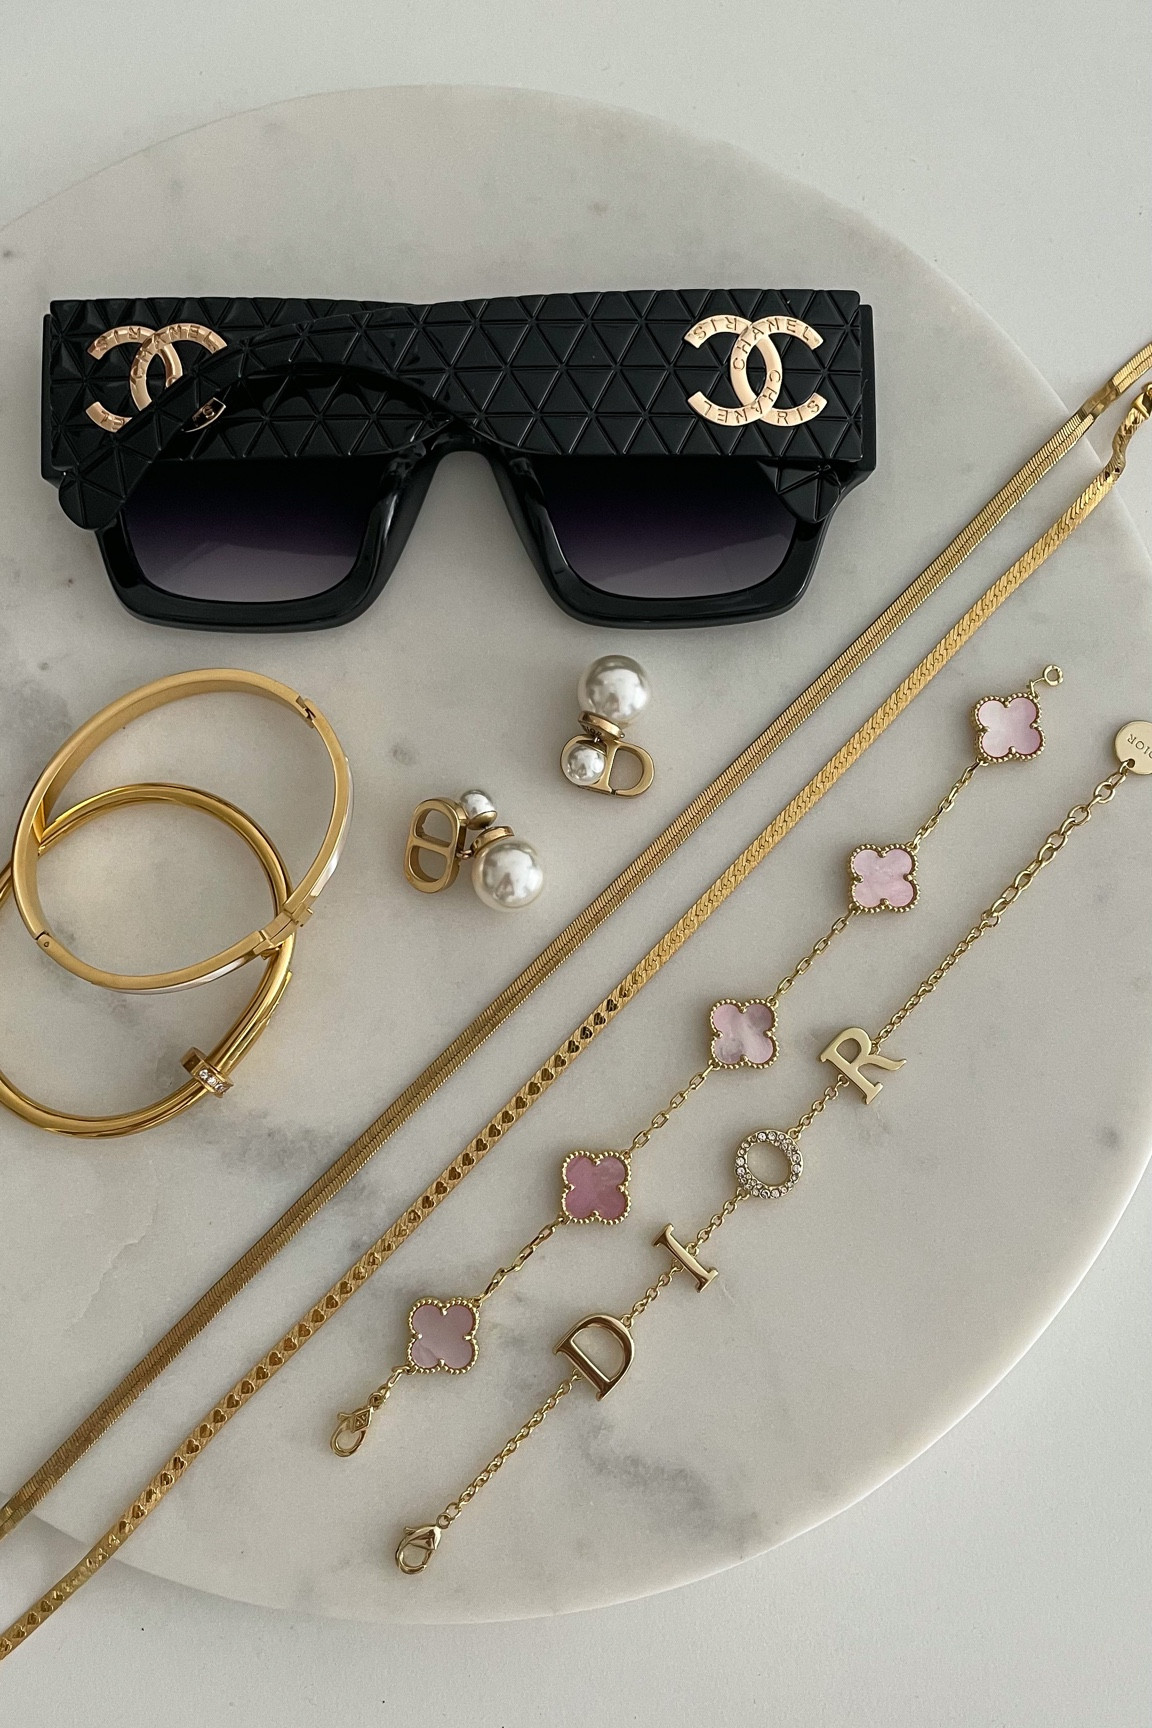 Chanel sunglasses : r/DHgate